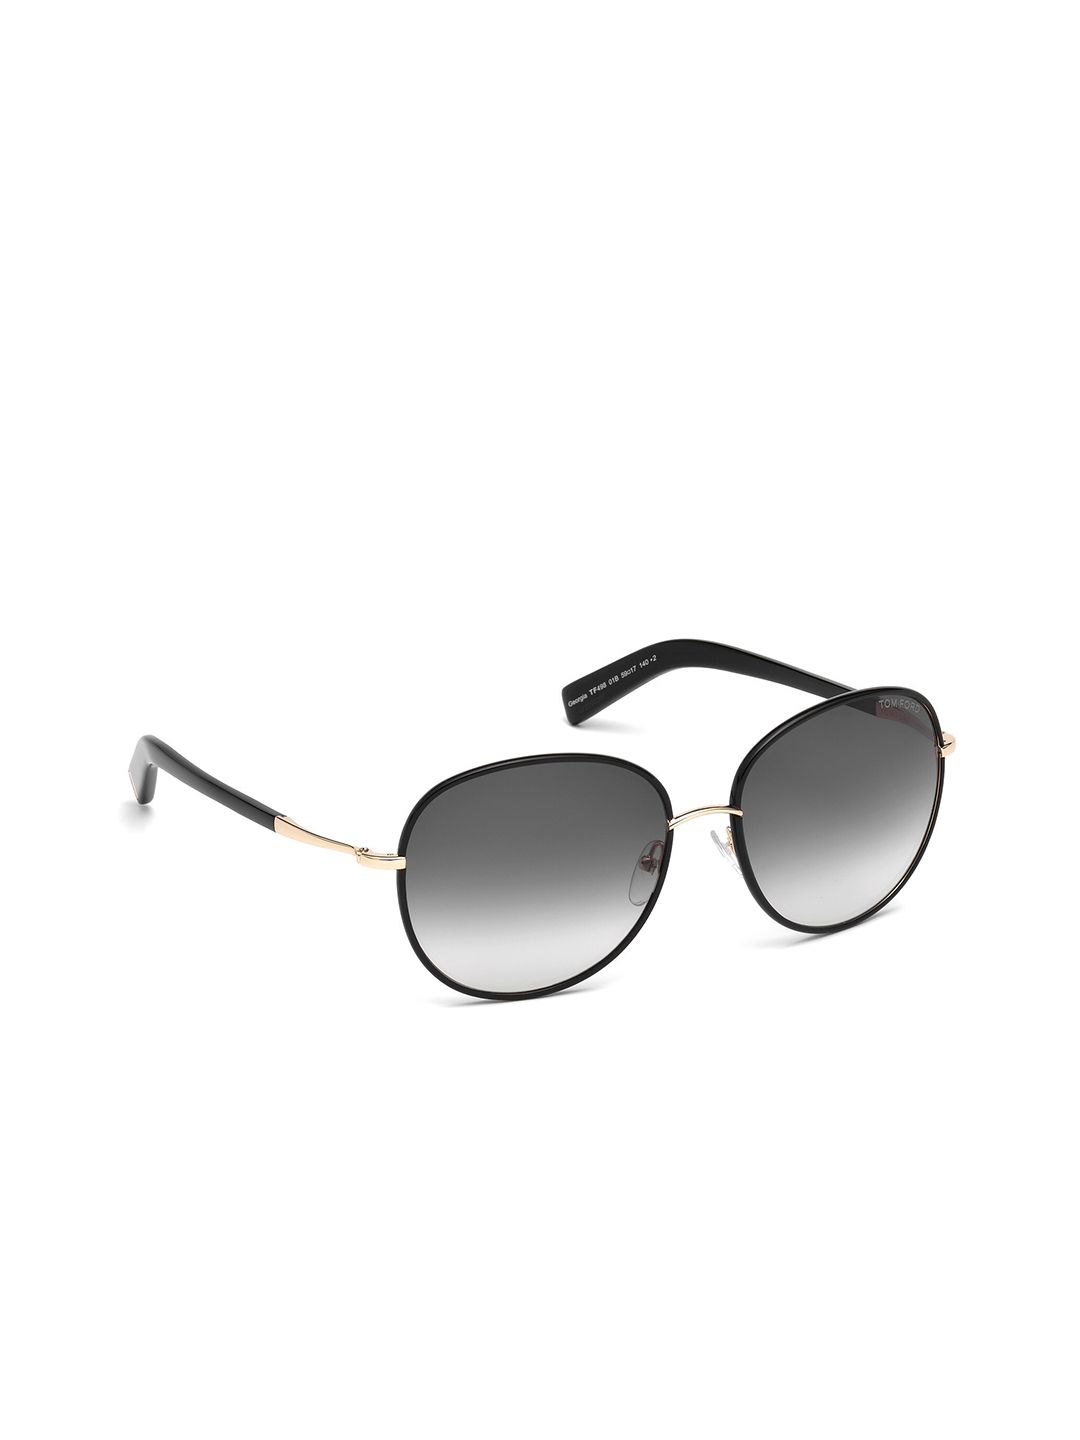 Tom Ford Women Grey Lens & Gold-Toned Aviator Sunglasses - FT0498 59 01B-Black Price in India